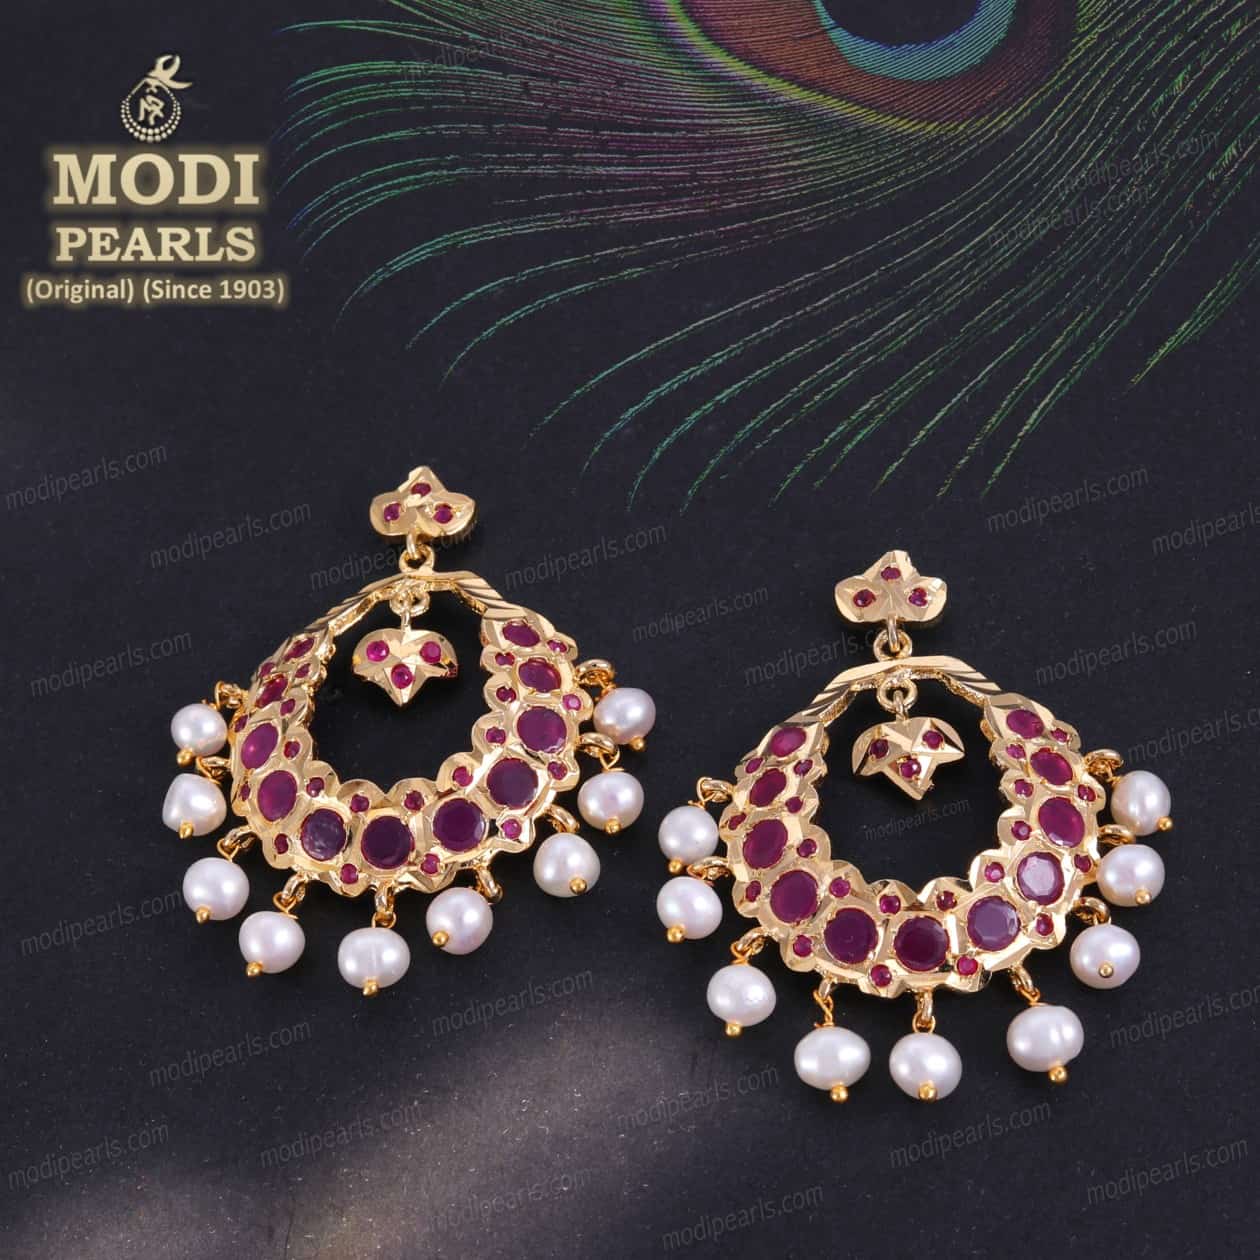 Chandbali earrings trending models - Swarnakshi Jewelry